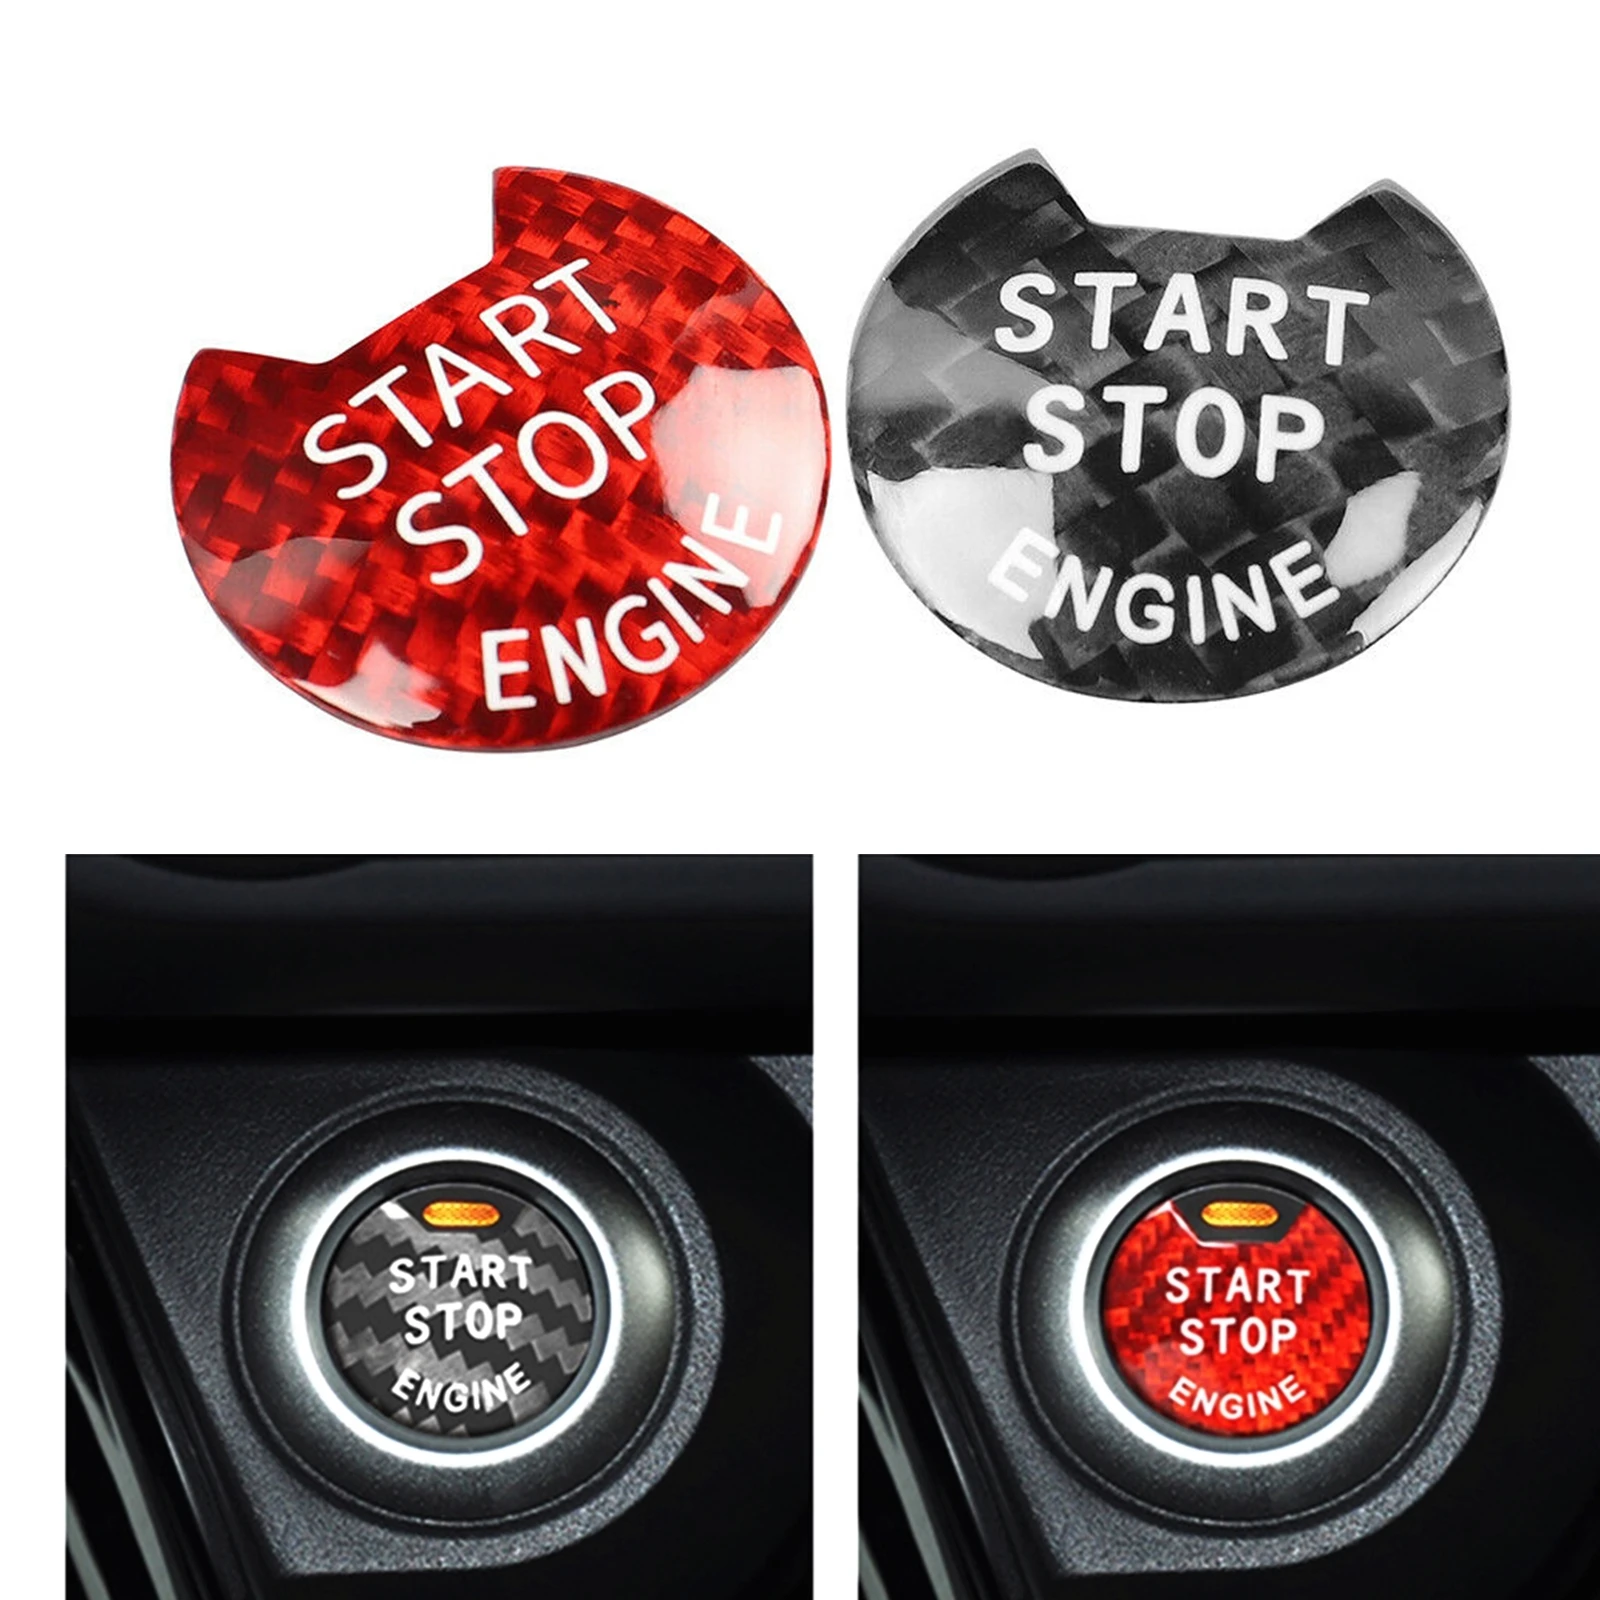 

Carbon Fiber Engine Start Stop Push Button Switch Cover Key Sticker Strip Trim Decoration For Nissan Infiniti Q50 Q60 2011-2019